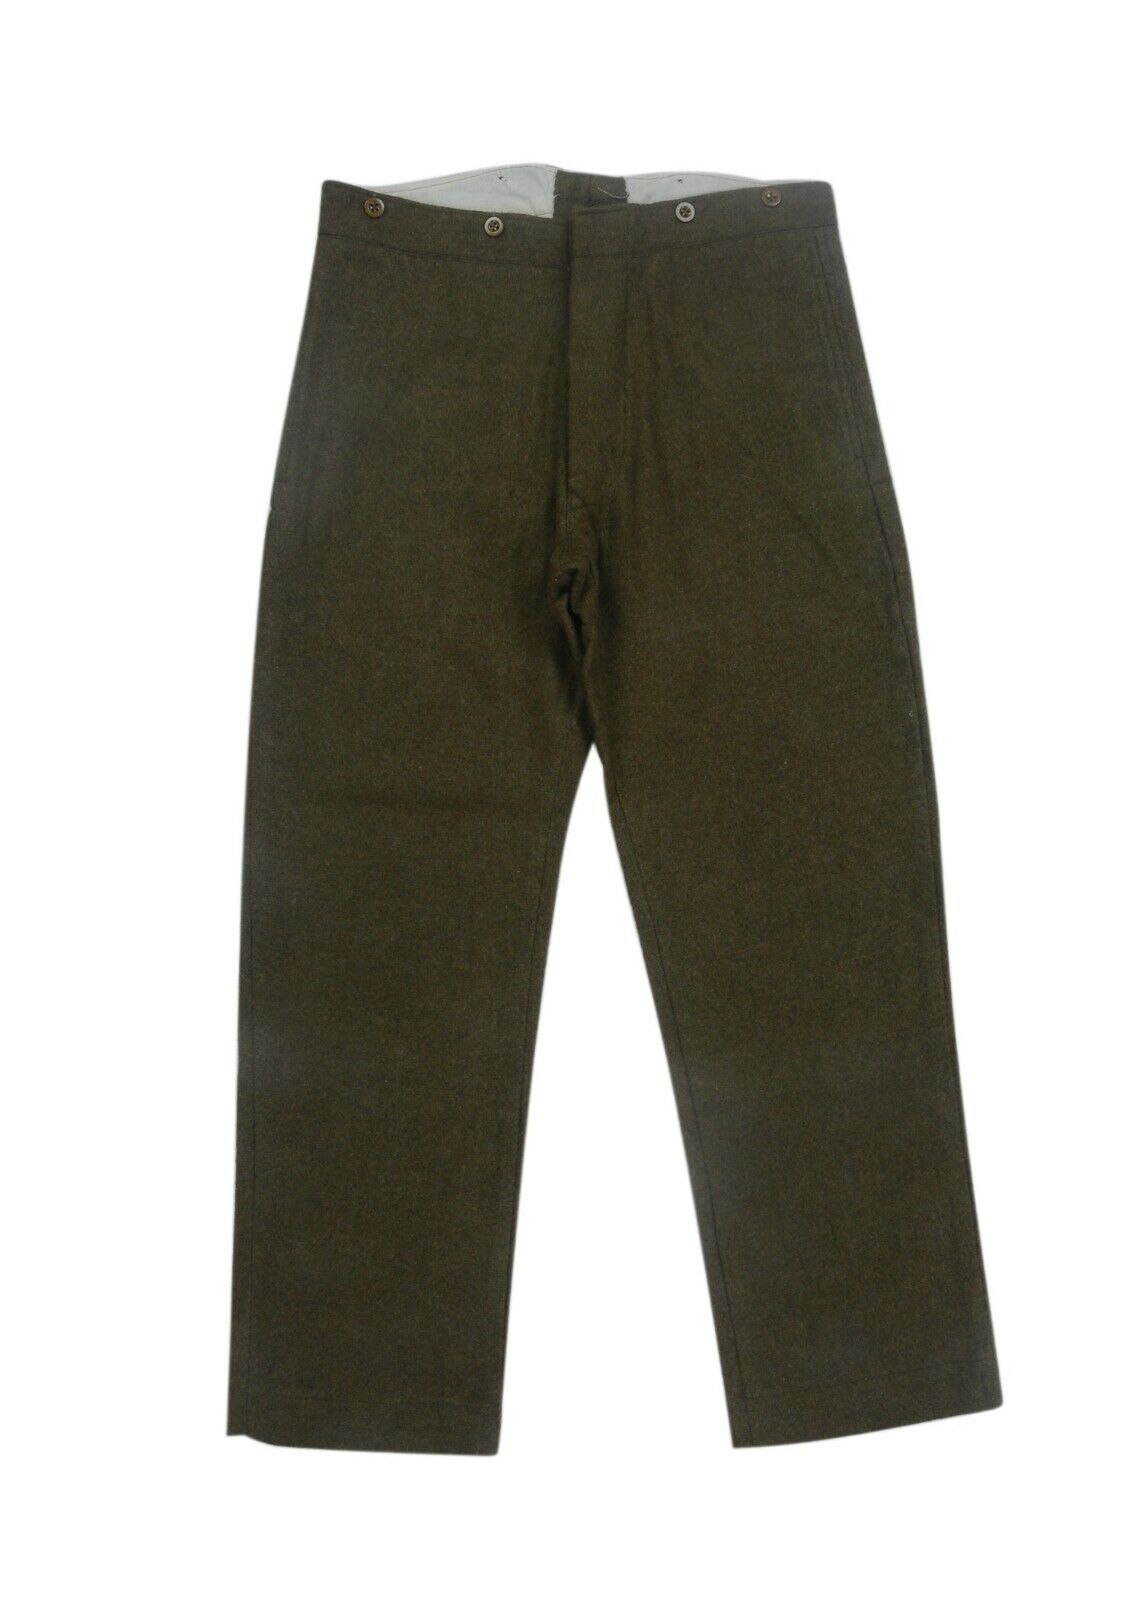 Repro WW1 British Military 1902 Service Dress SD Uniform Trousers (42 Inches)